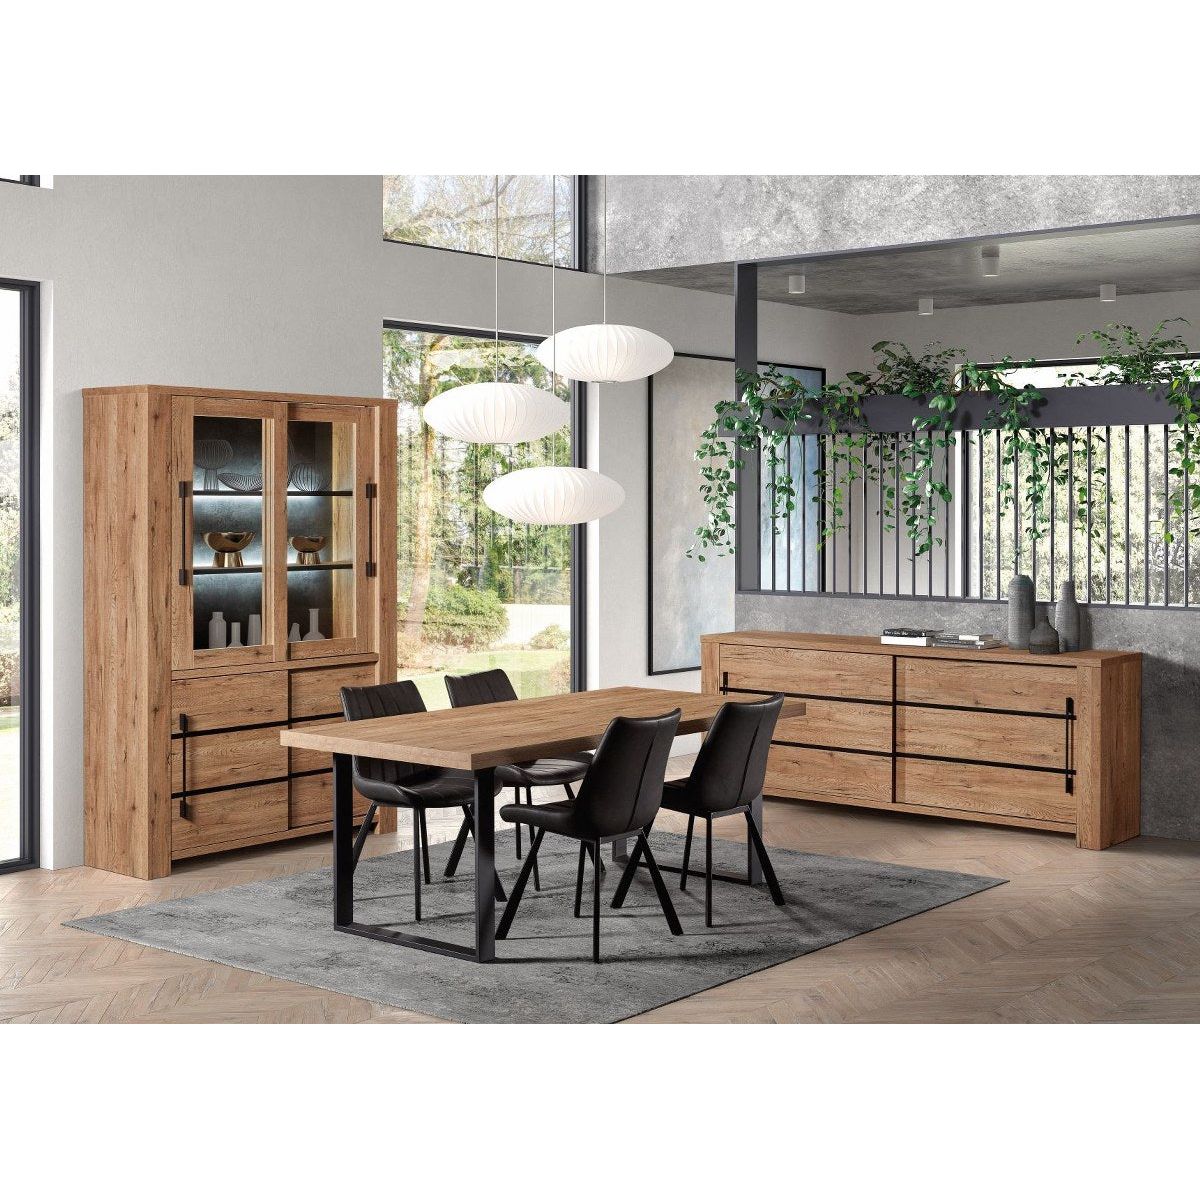 Coffee table | Furniture series Basto | brown, natural